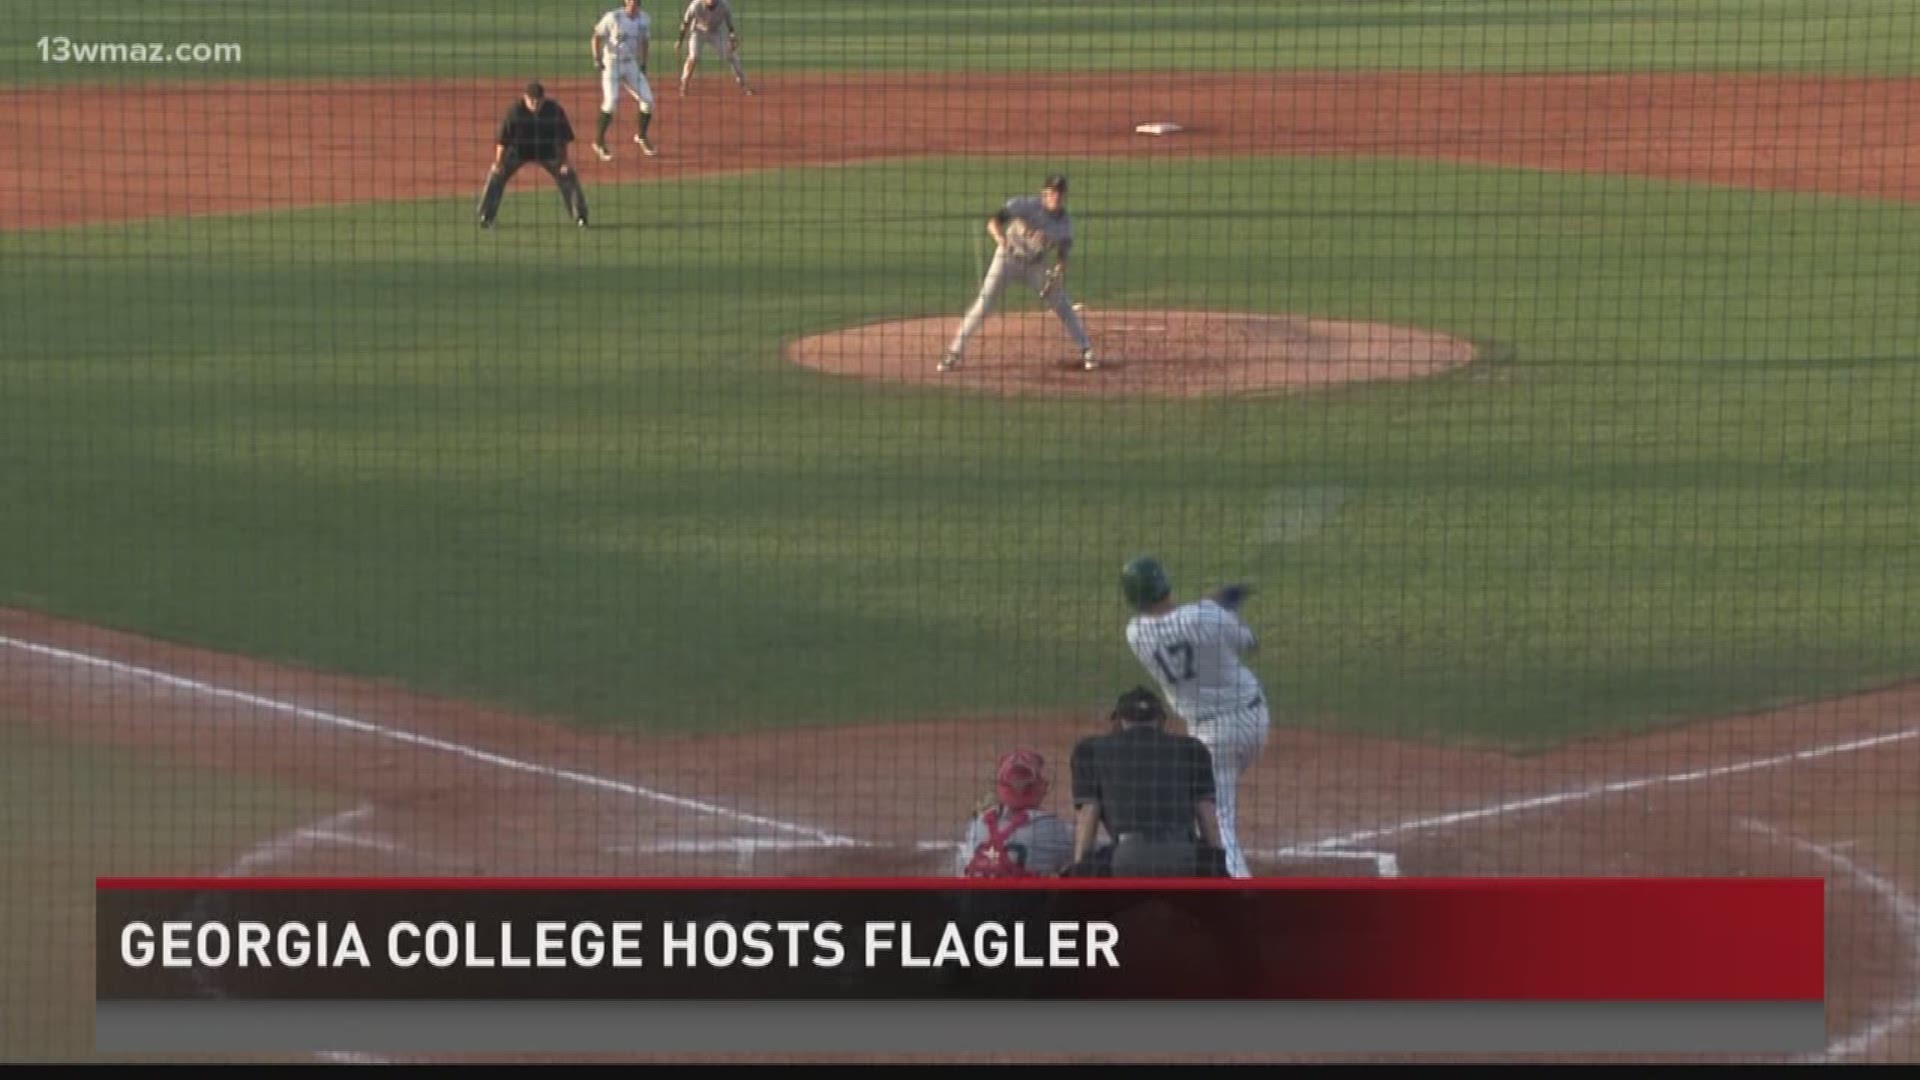 Georgia College hosts Flagler